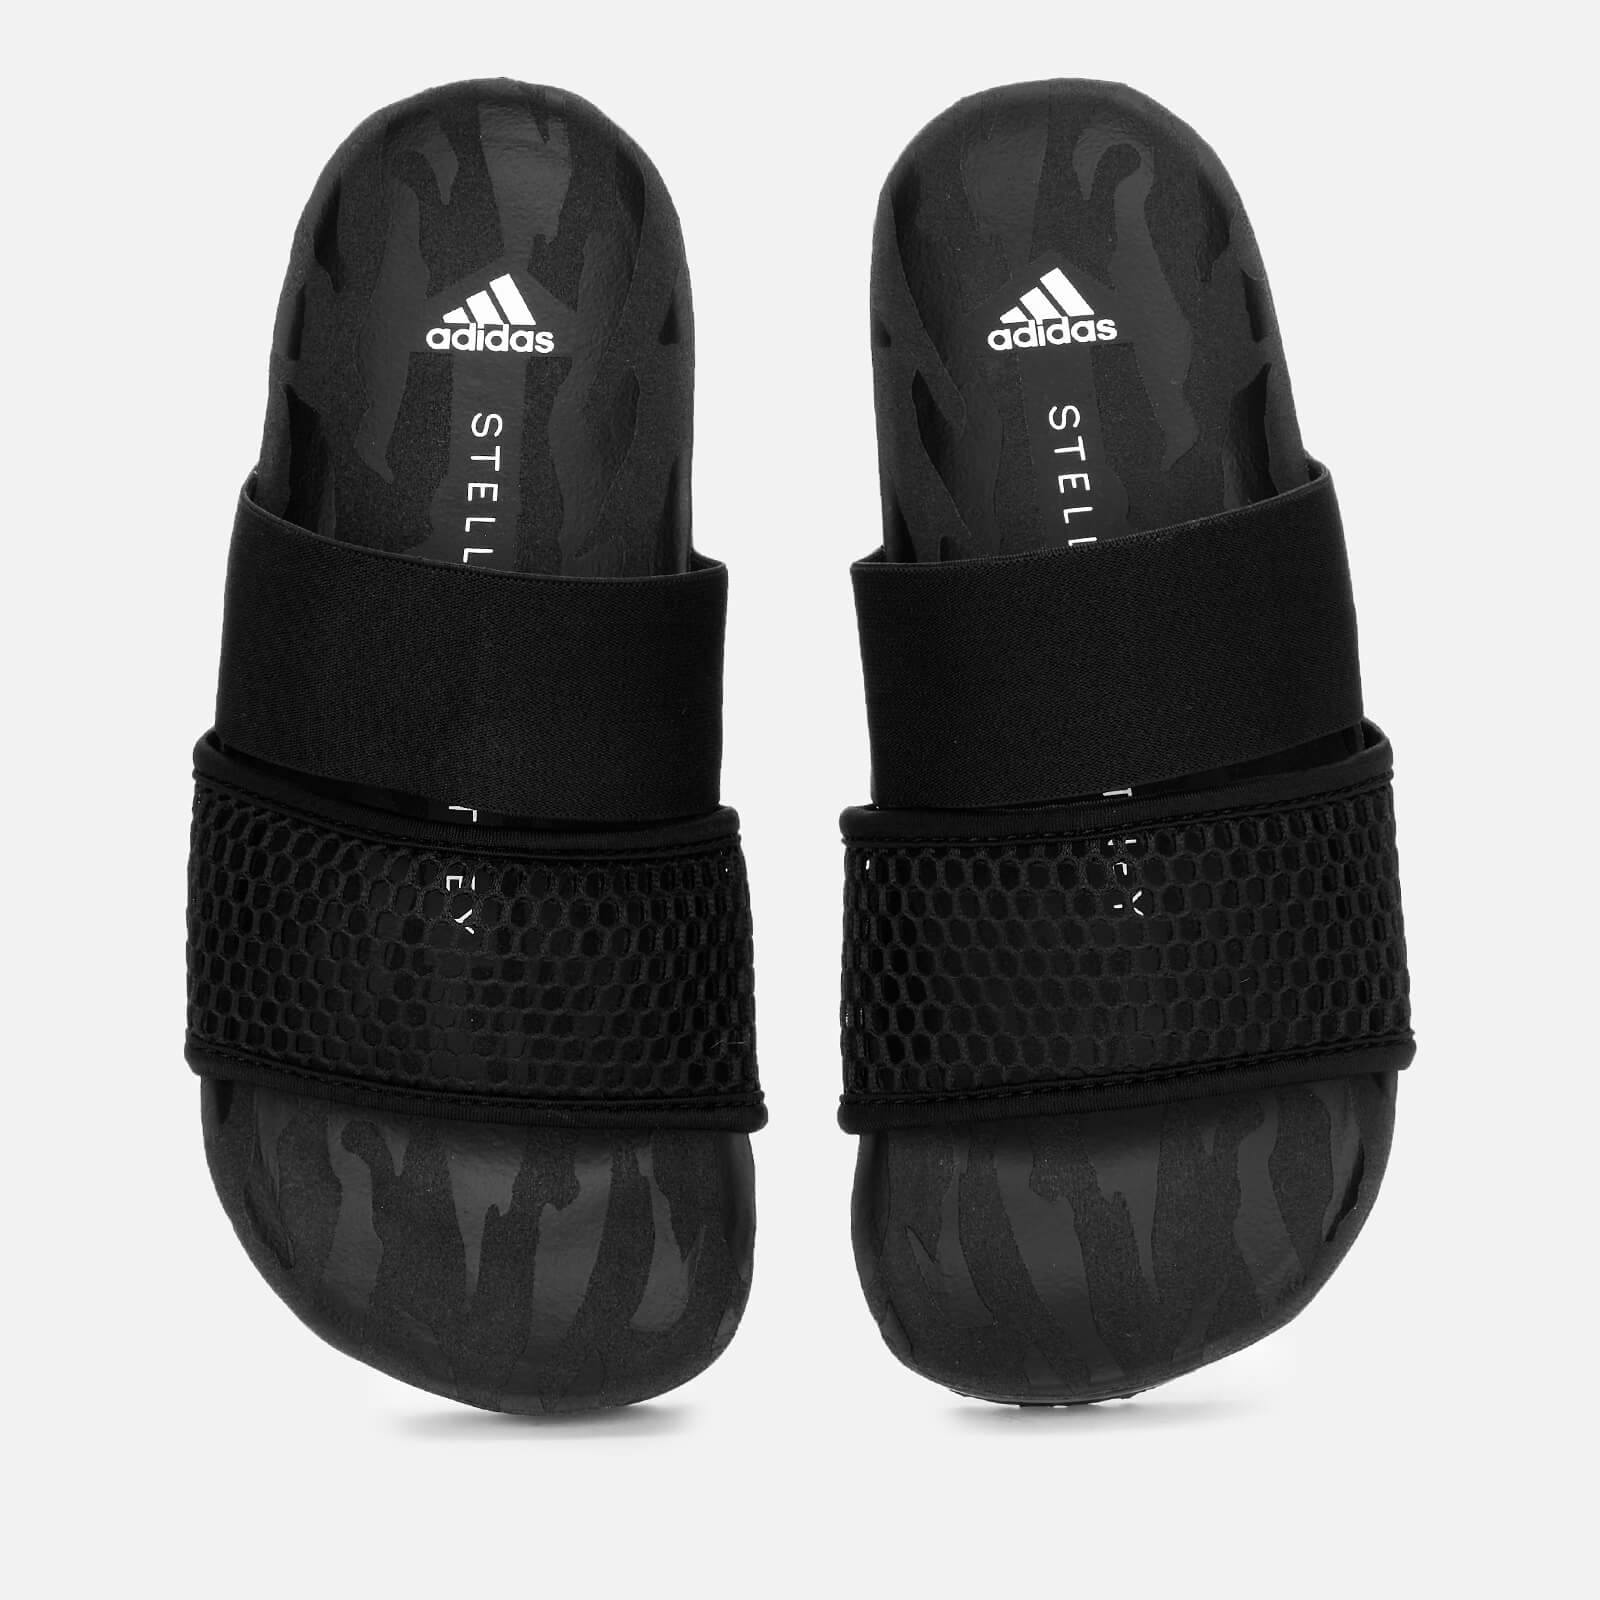 Adidas by Stella McCartney Women's Asmc Lette Slide Sandals - Black - UK 4